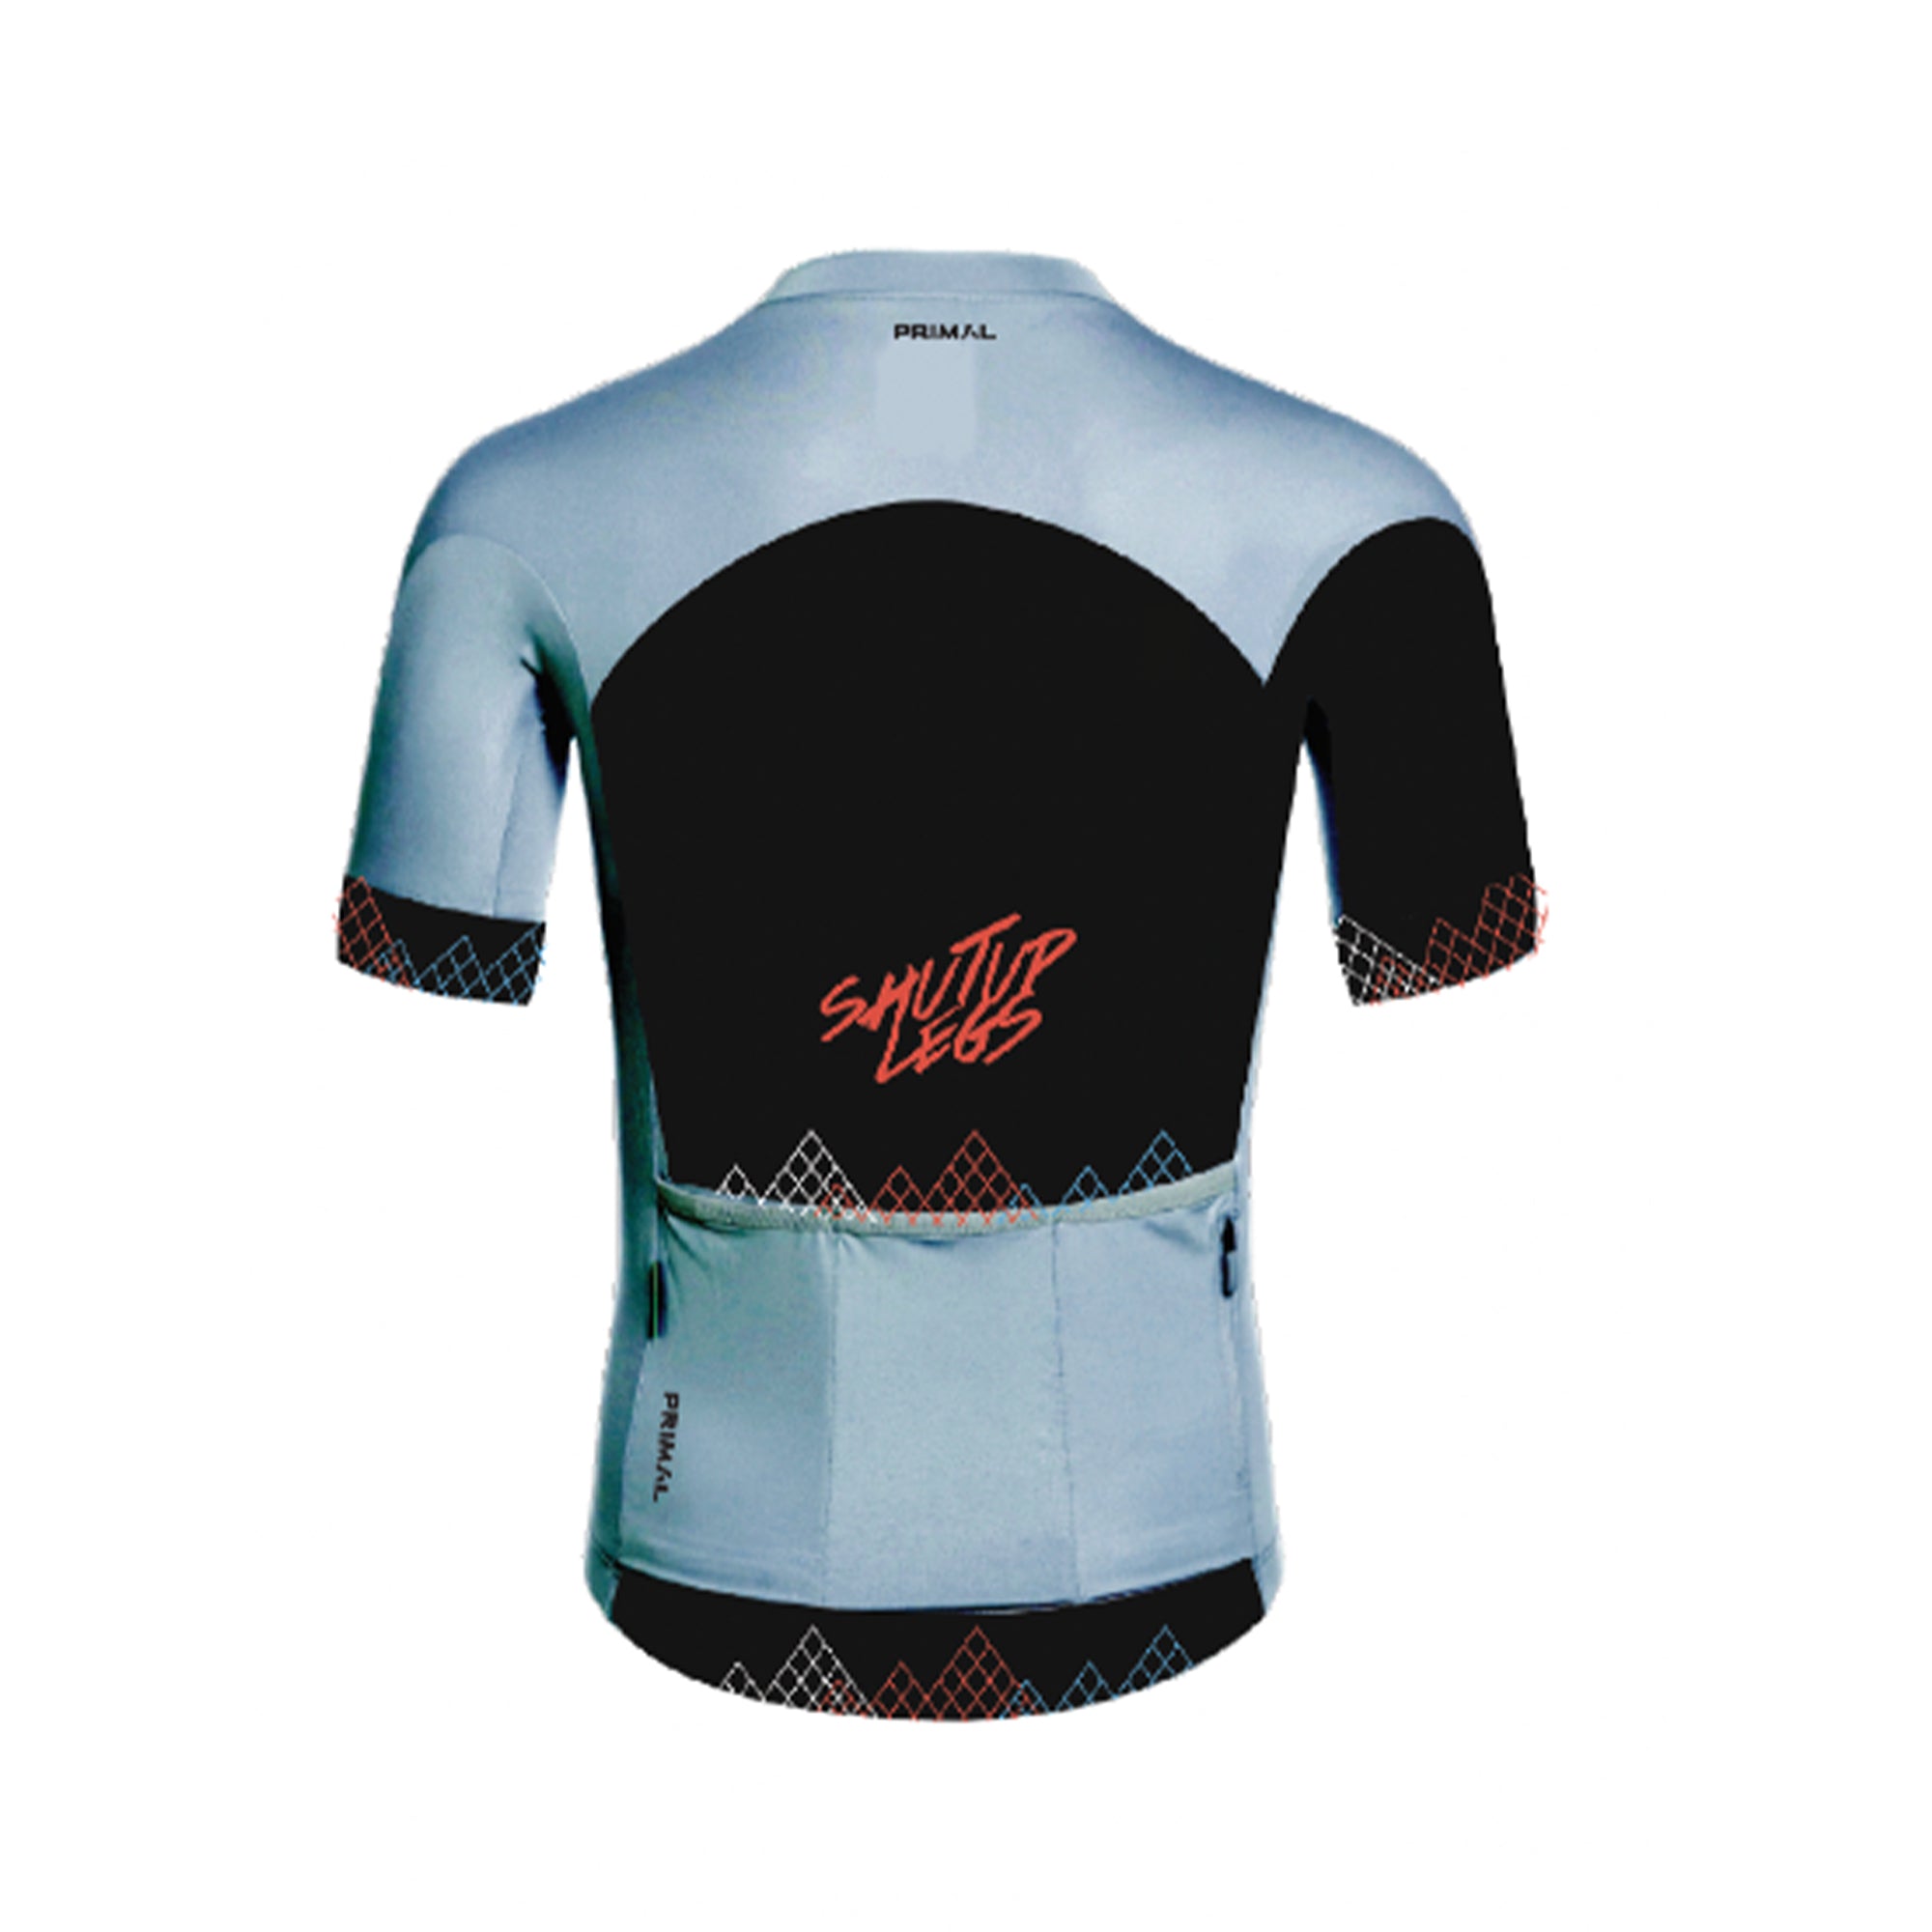 Primal Wear SUL KOM Cycling Jersey $120